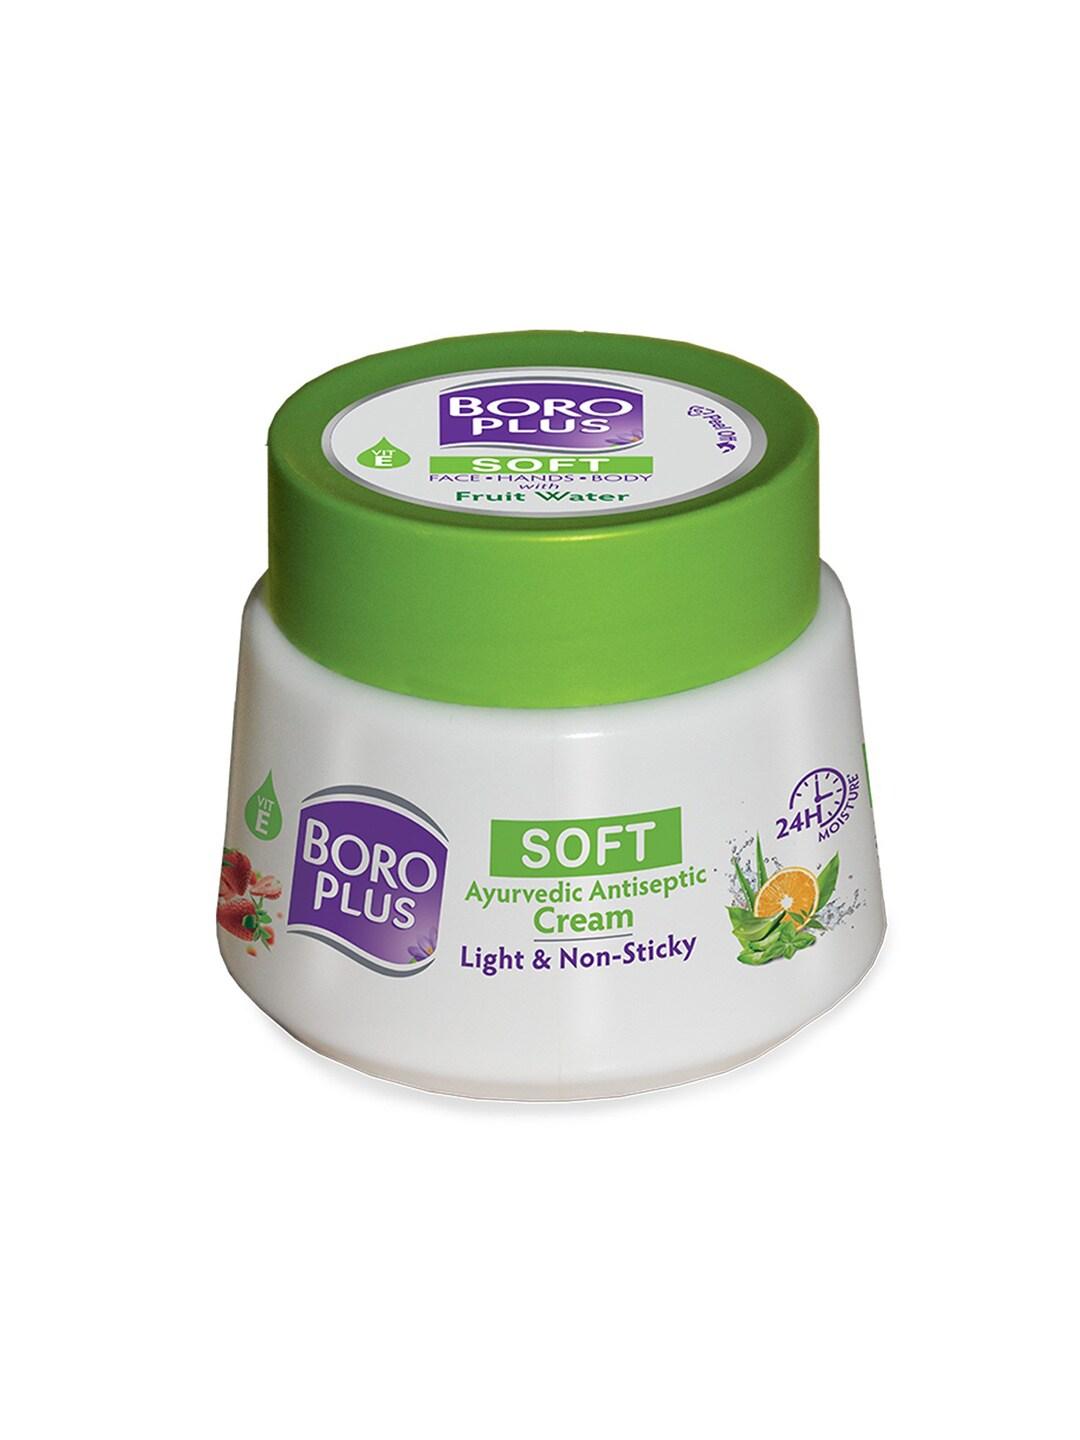 BOROPLUS Soft Ayurvedic Light & Non-Sticky Antiseptic Cream for 24 Hrs Moisture - 200 ml